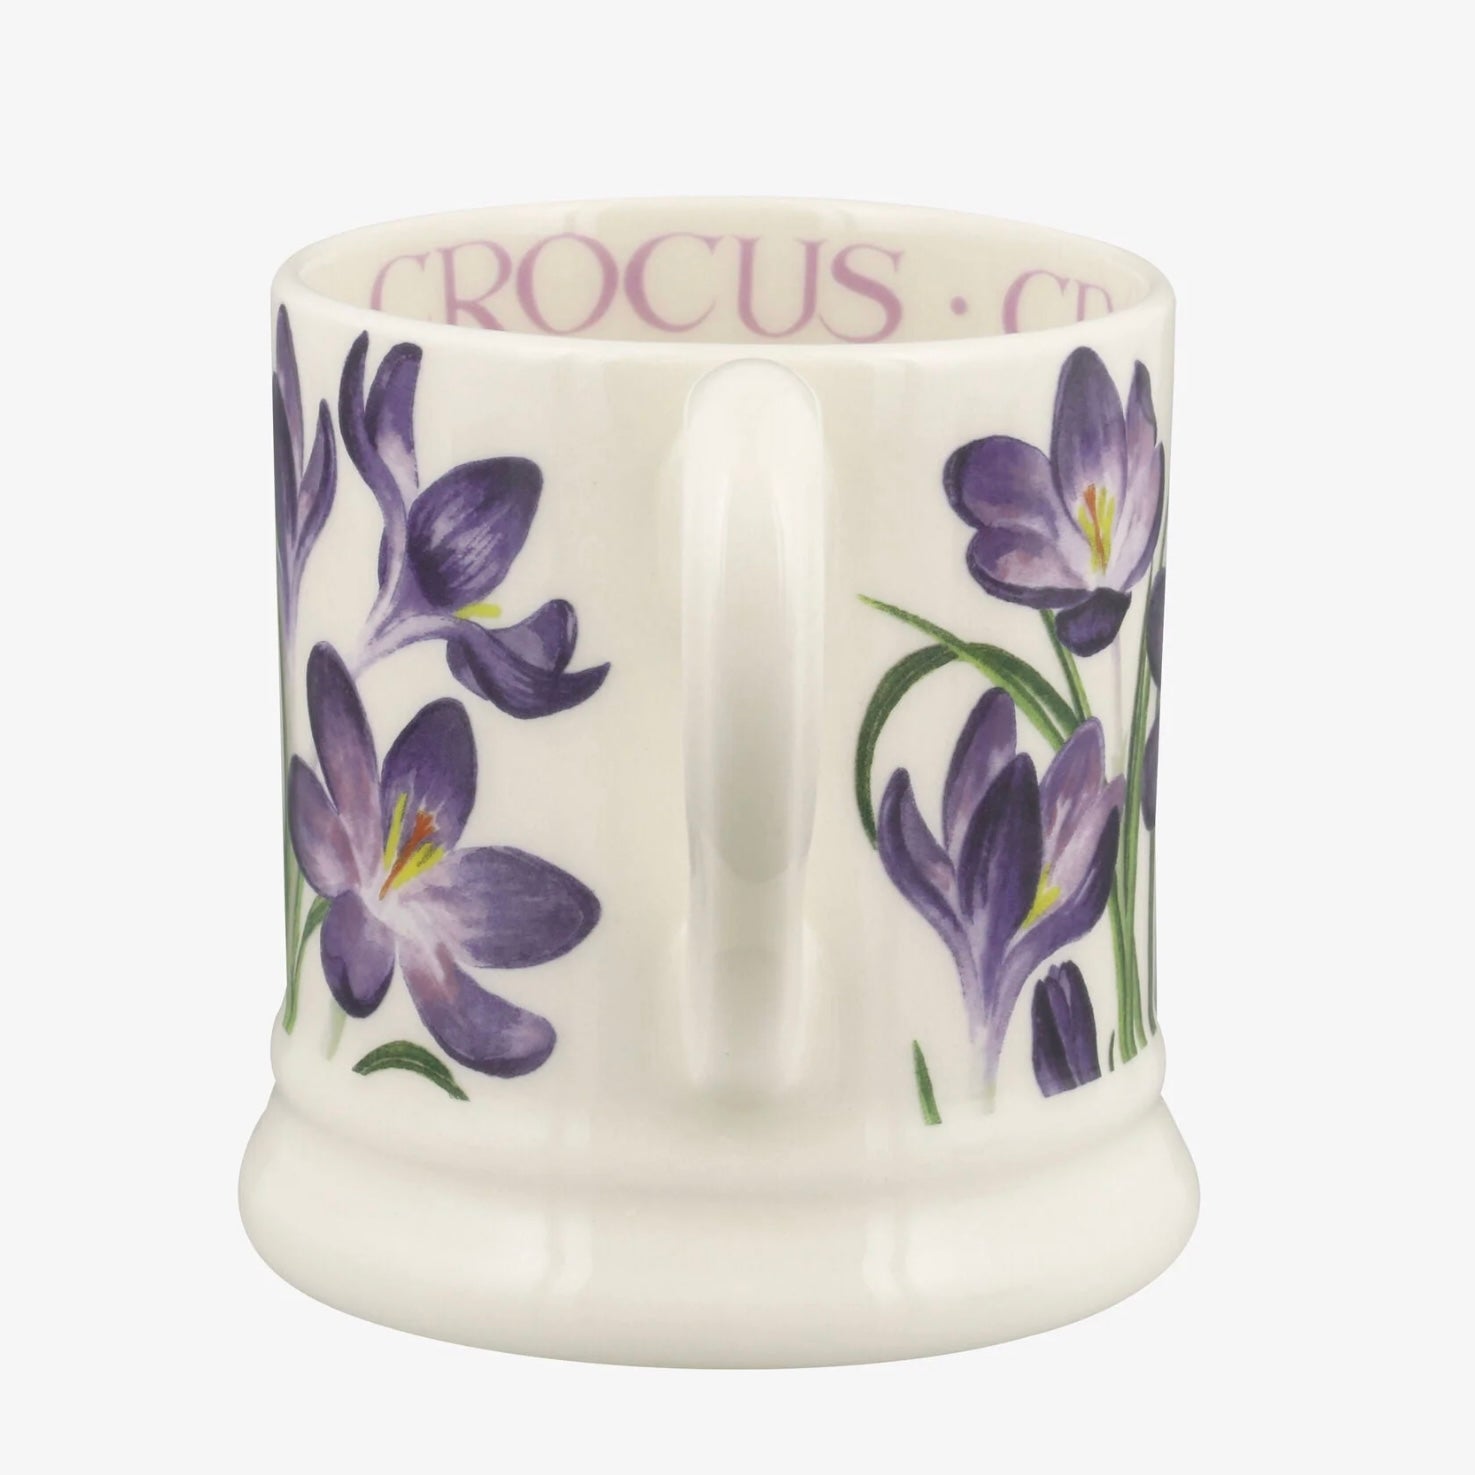 Emma Bridgewater - Crocus 1/2 Pint Mug - The Flower Crate